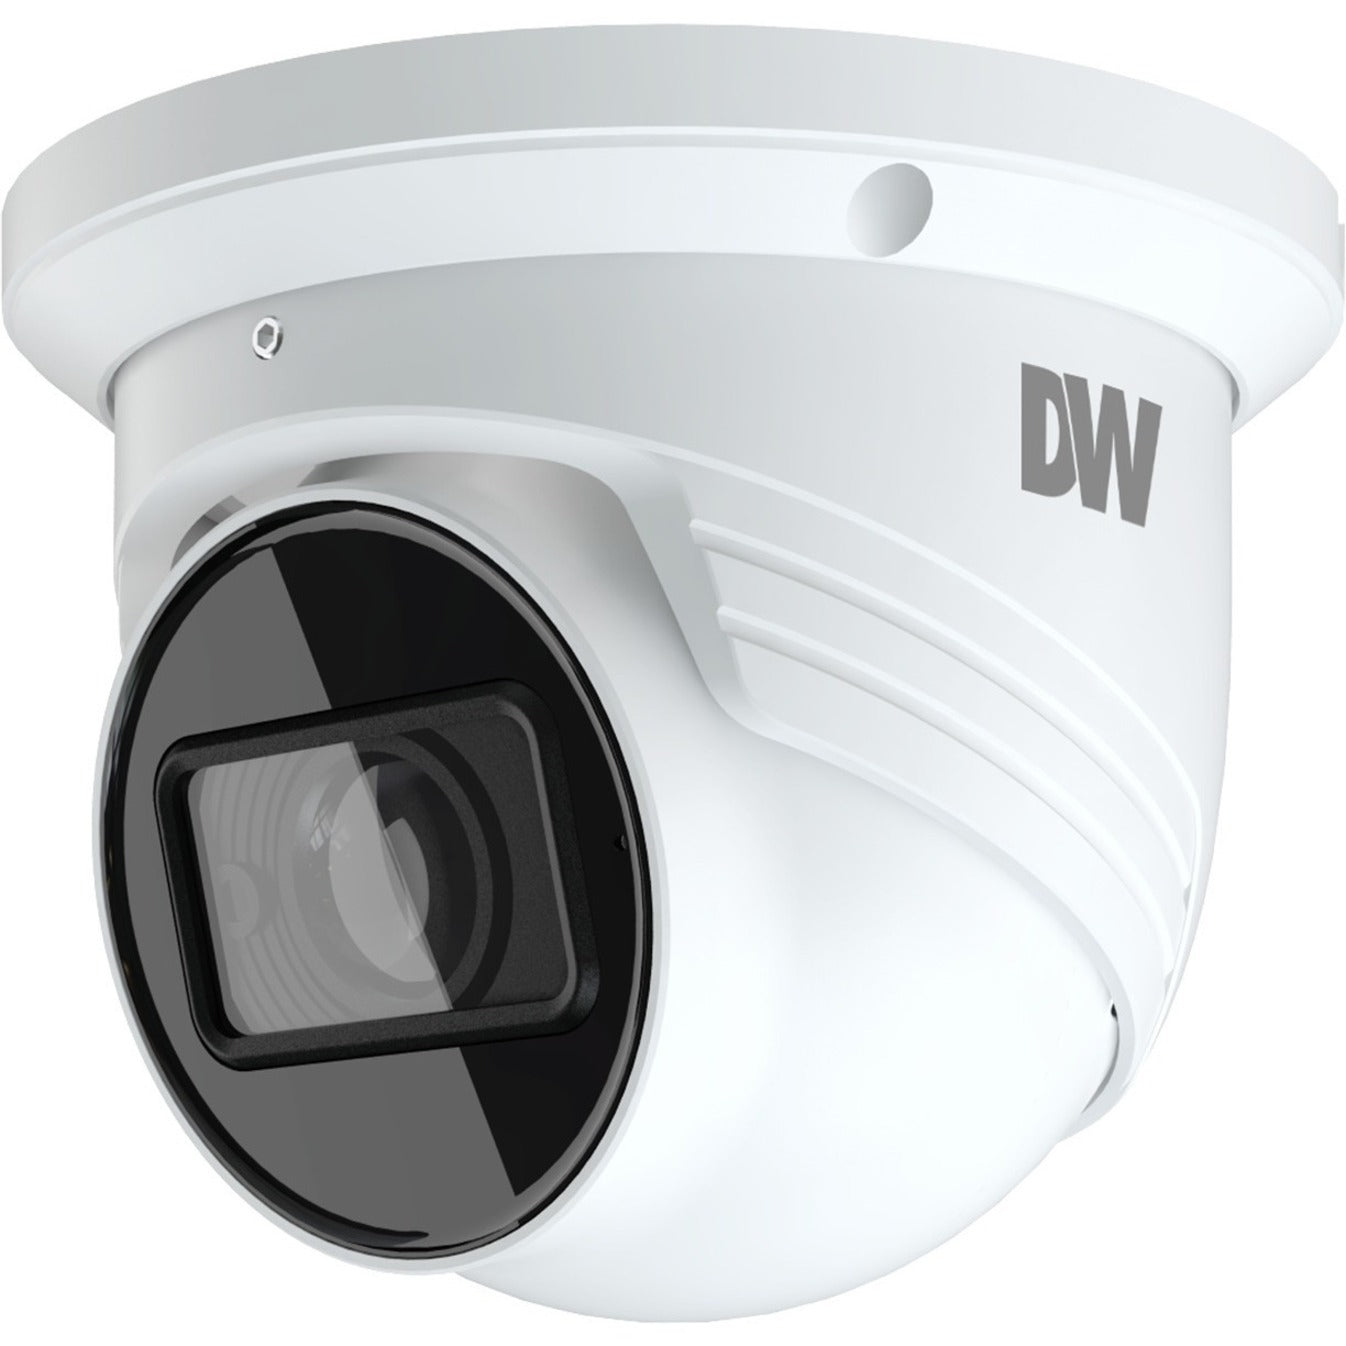 Digital Watchdog DWC-MT95WIATW 5MP Turret IP Camera, Varifocal Lens, 4.3x Optical Zoom, H.265/H.264 Video Formats, 2592 x 1944 Resolution